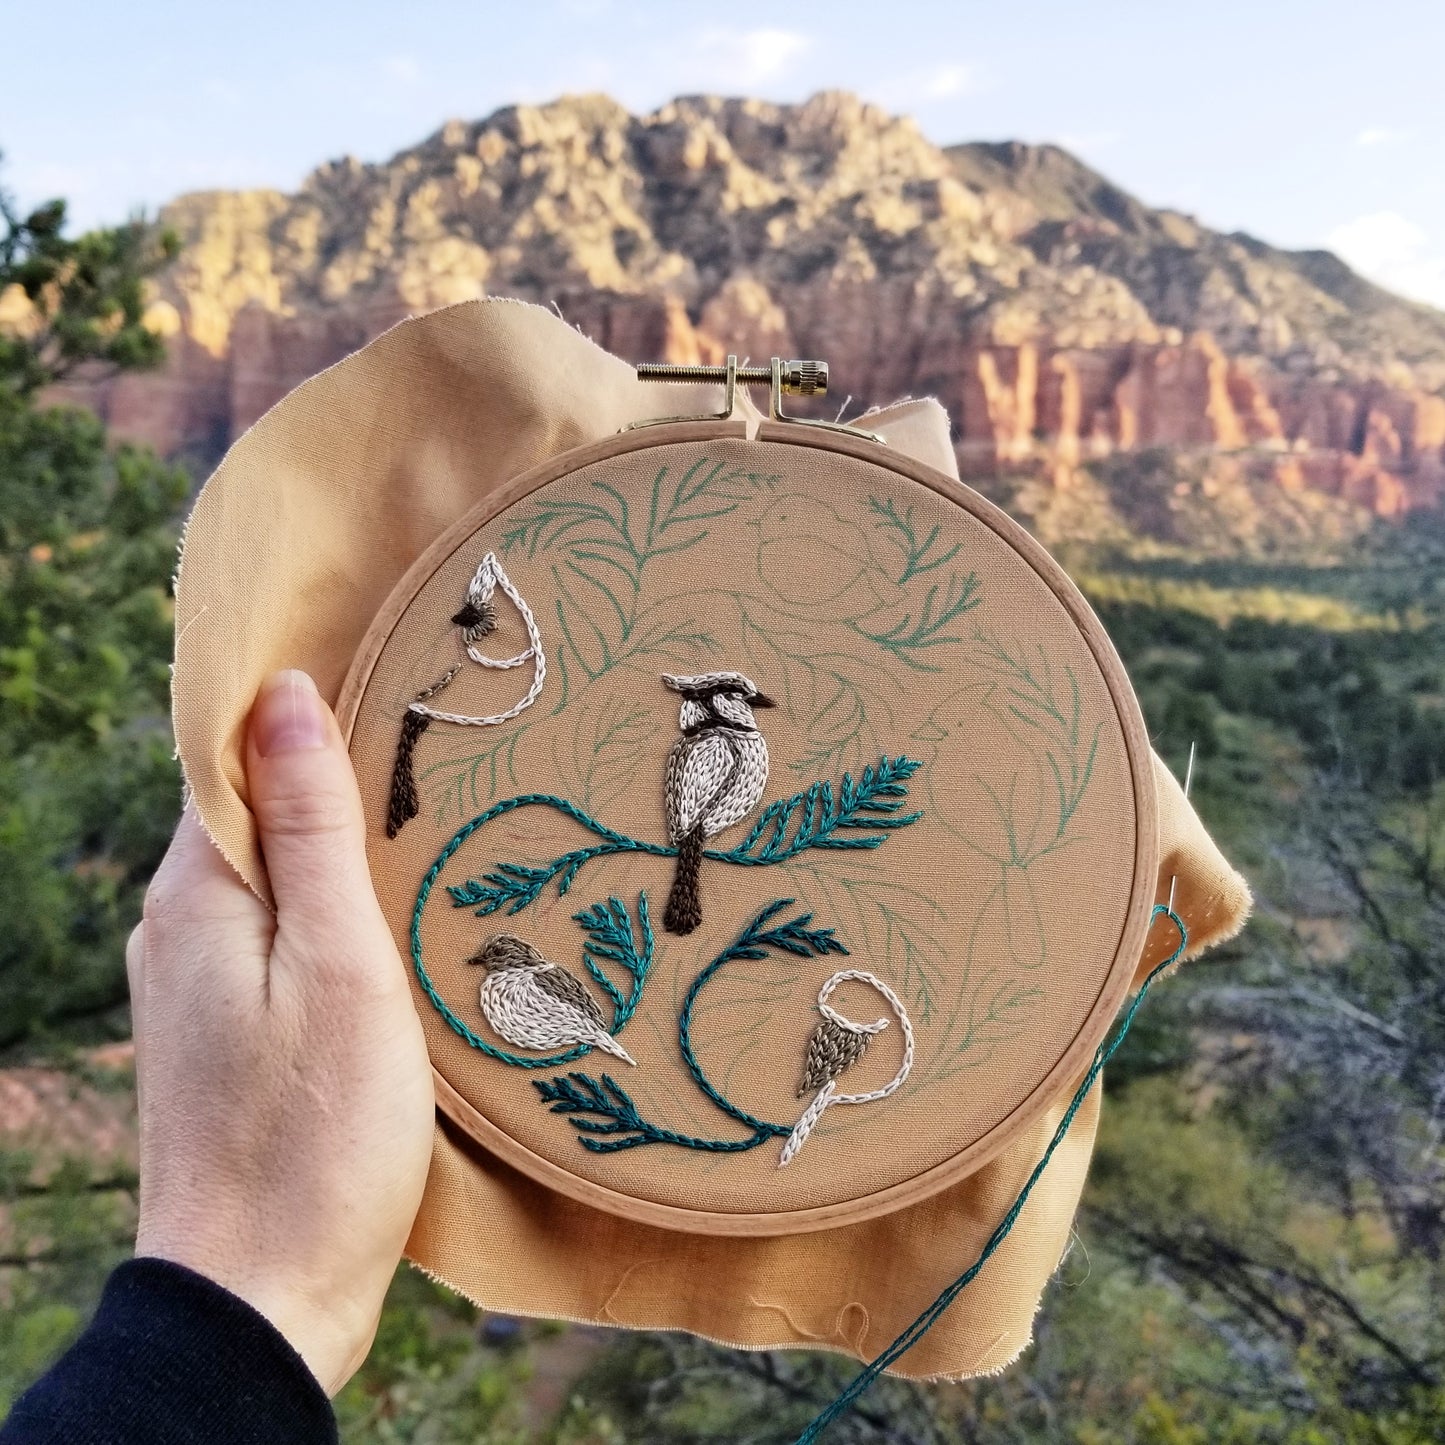 Winter Birds Embroidery Pattern (PDF)